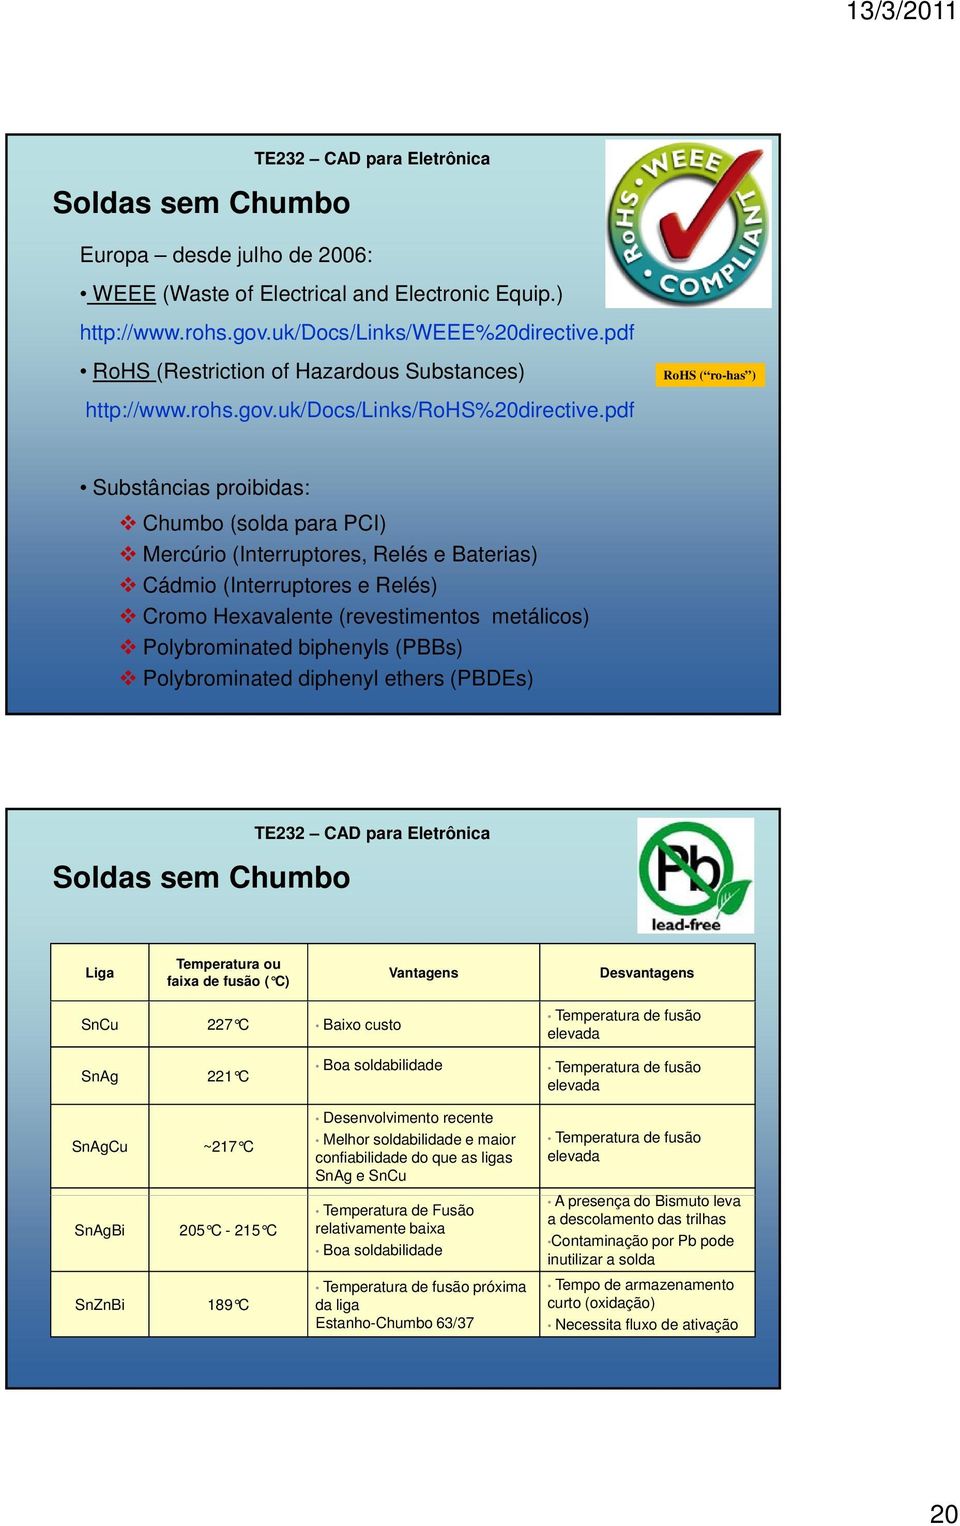 pdf RoHS ( ro-has ) Substâncias proibidas: Chumbo (solda para PCI) Mercúrio (Interruptores, Relés e Baterias) Cádmio (Interruptores e Relés) Cromo Hexavalente (revestimentos metálicos) Polybrominated